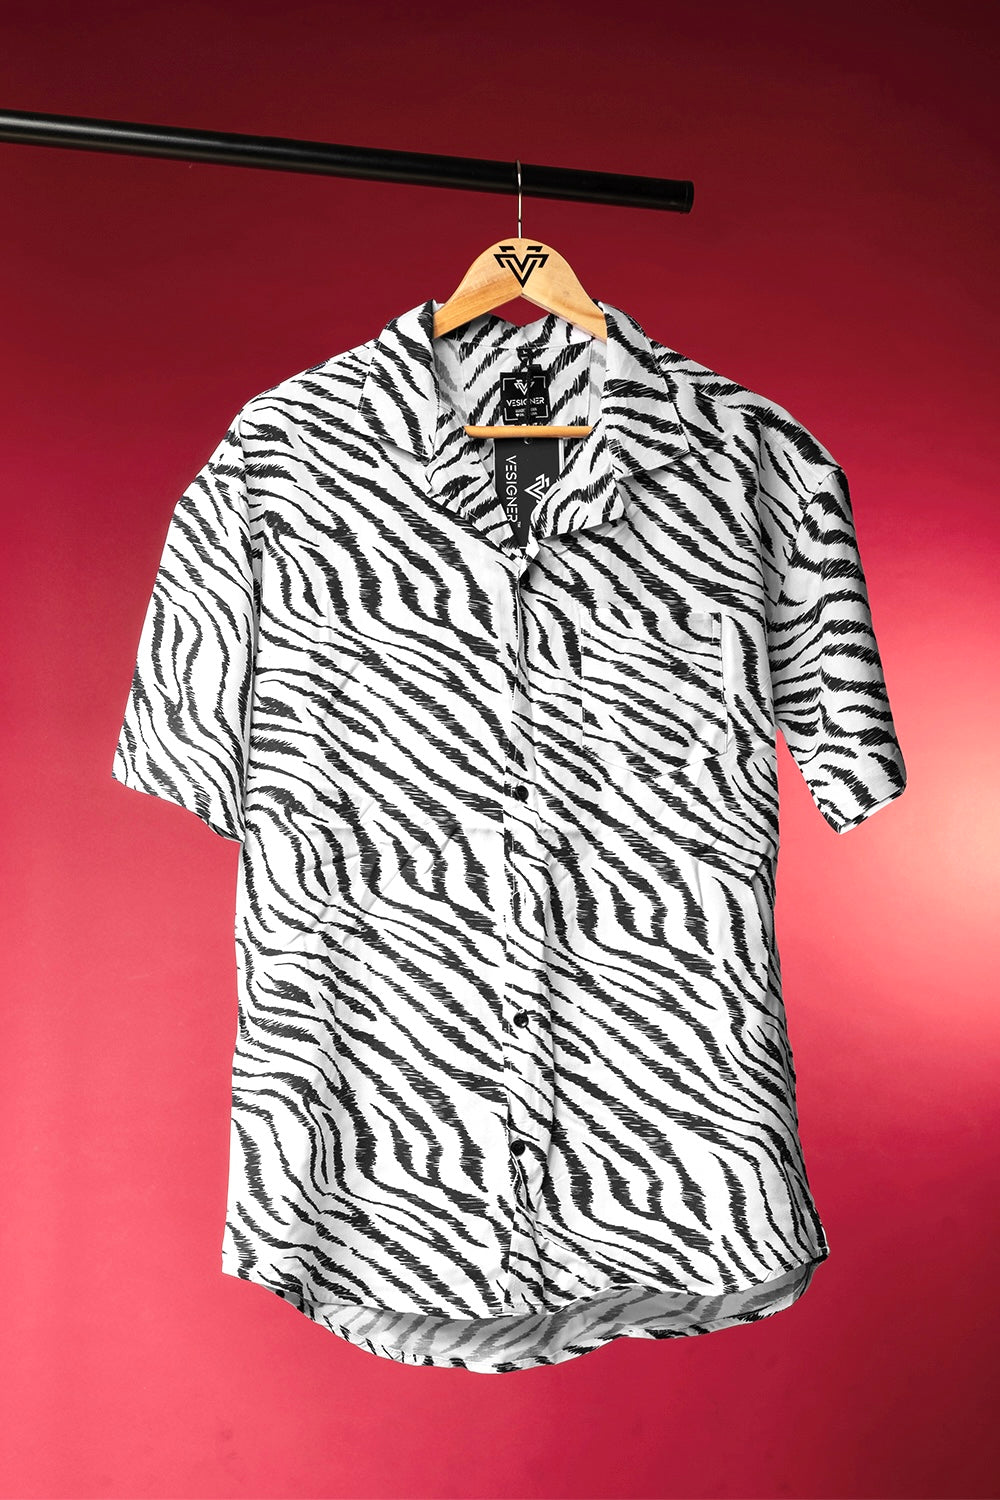 Zebra Stripes Printed Shirt